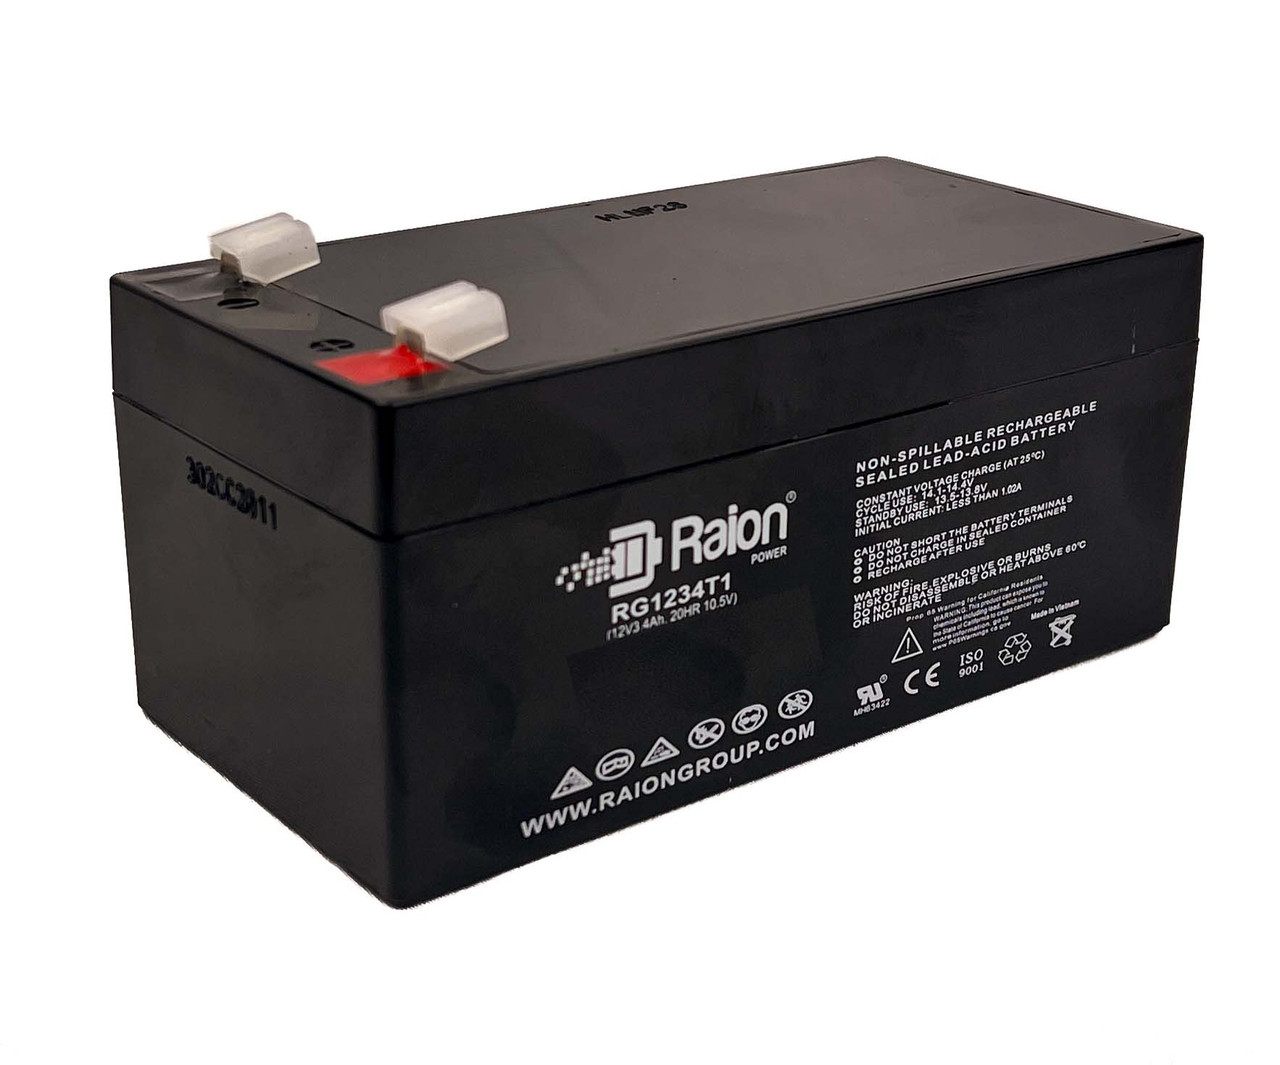 Raion Power 12V 3.4Ah Non-Spillable Replacement Battery for Black Box BAT/BBB3